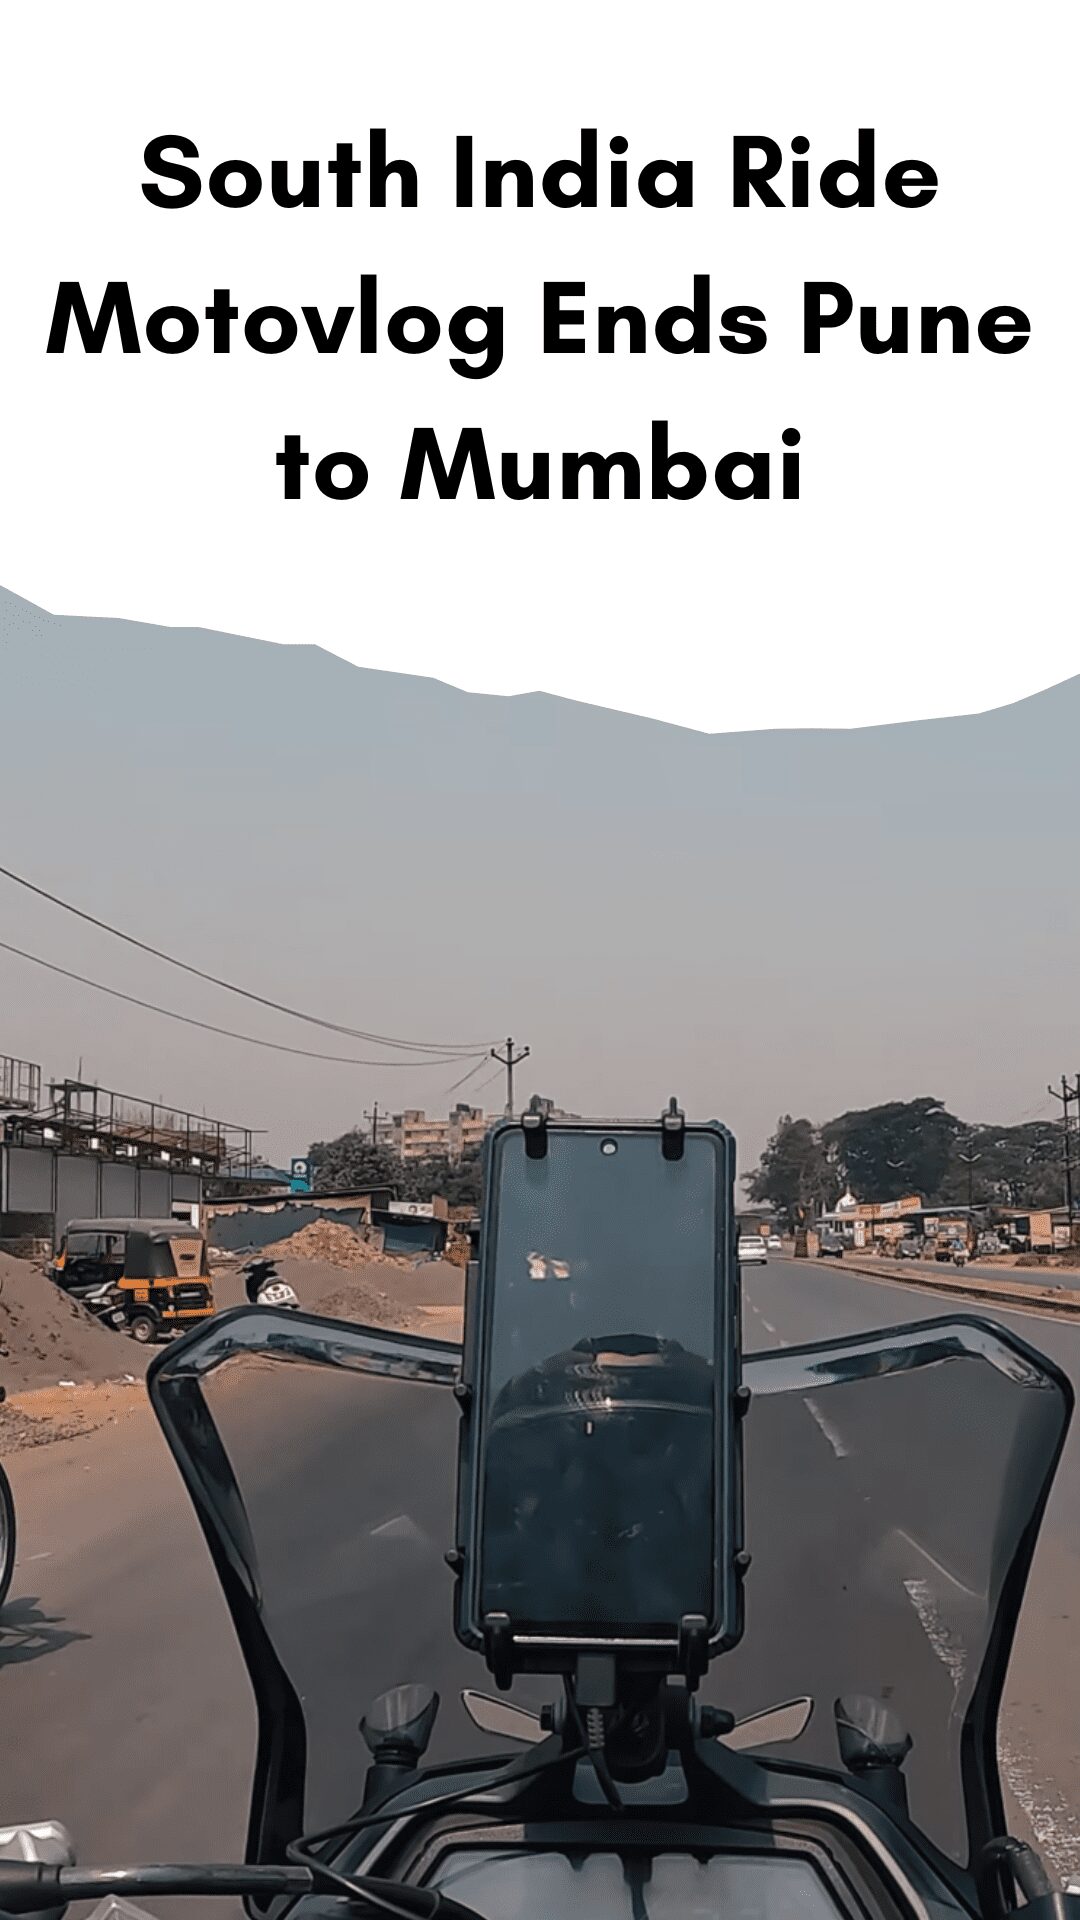 South India Ride Motovlog Ends Pune to Mumbai